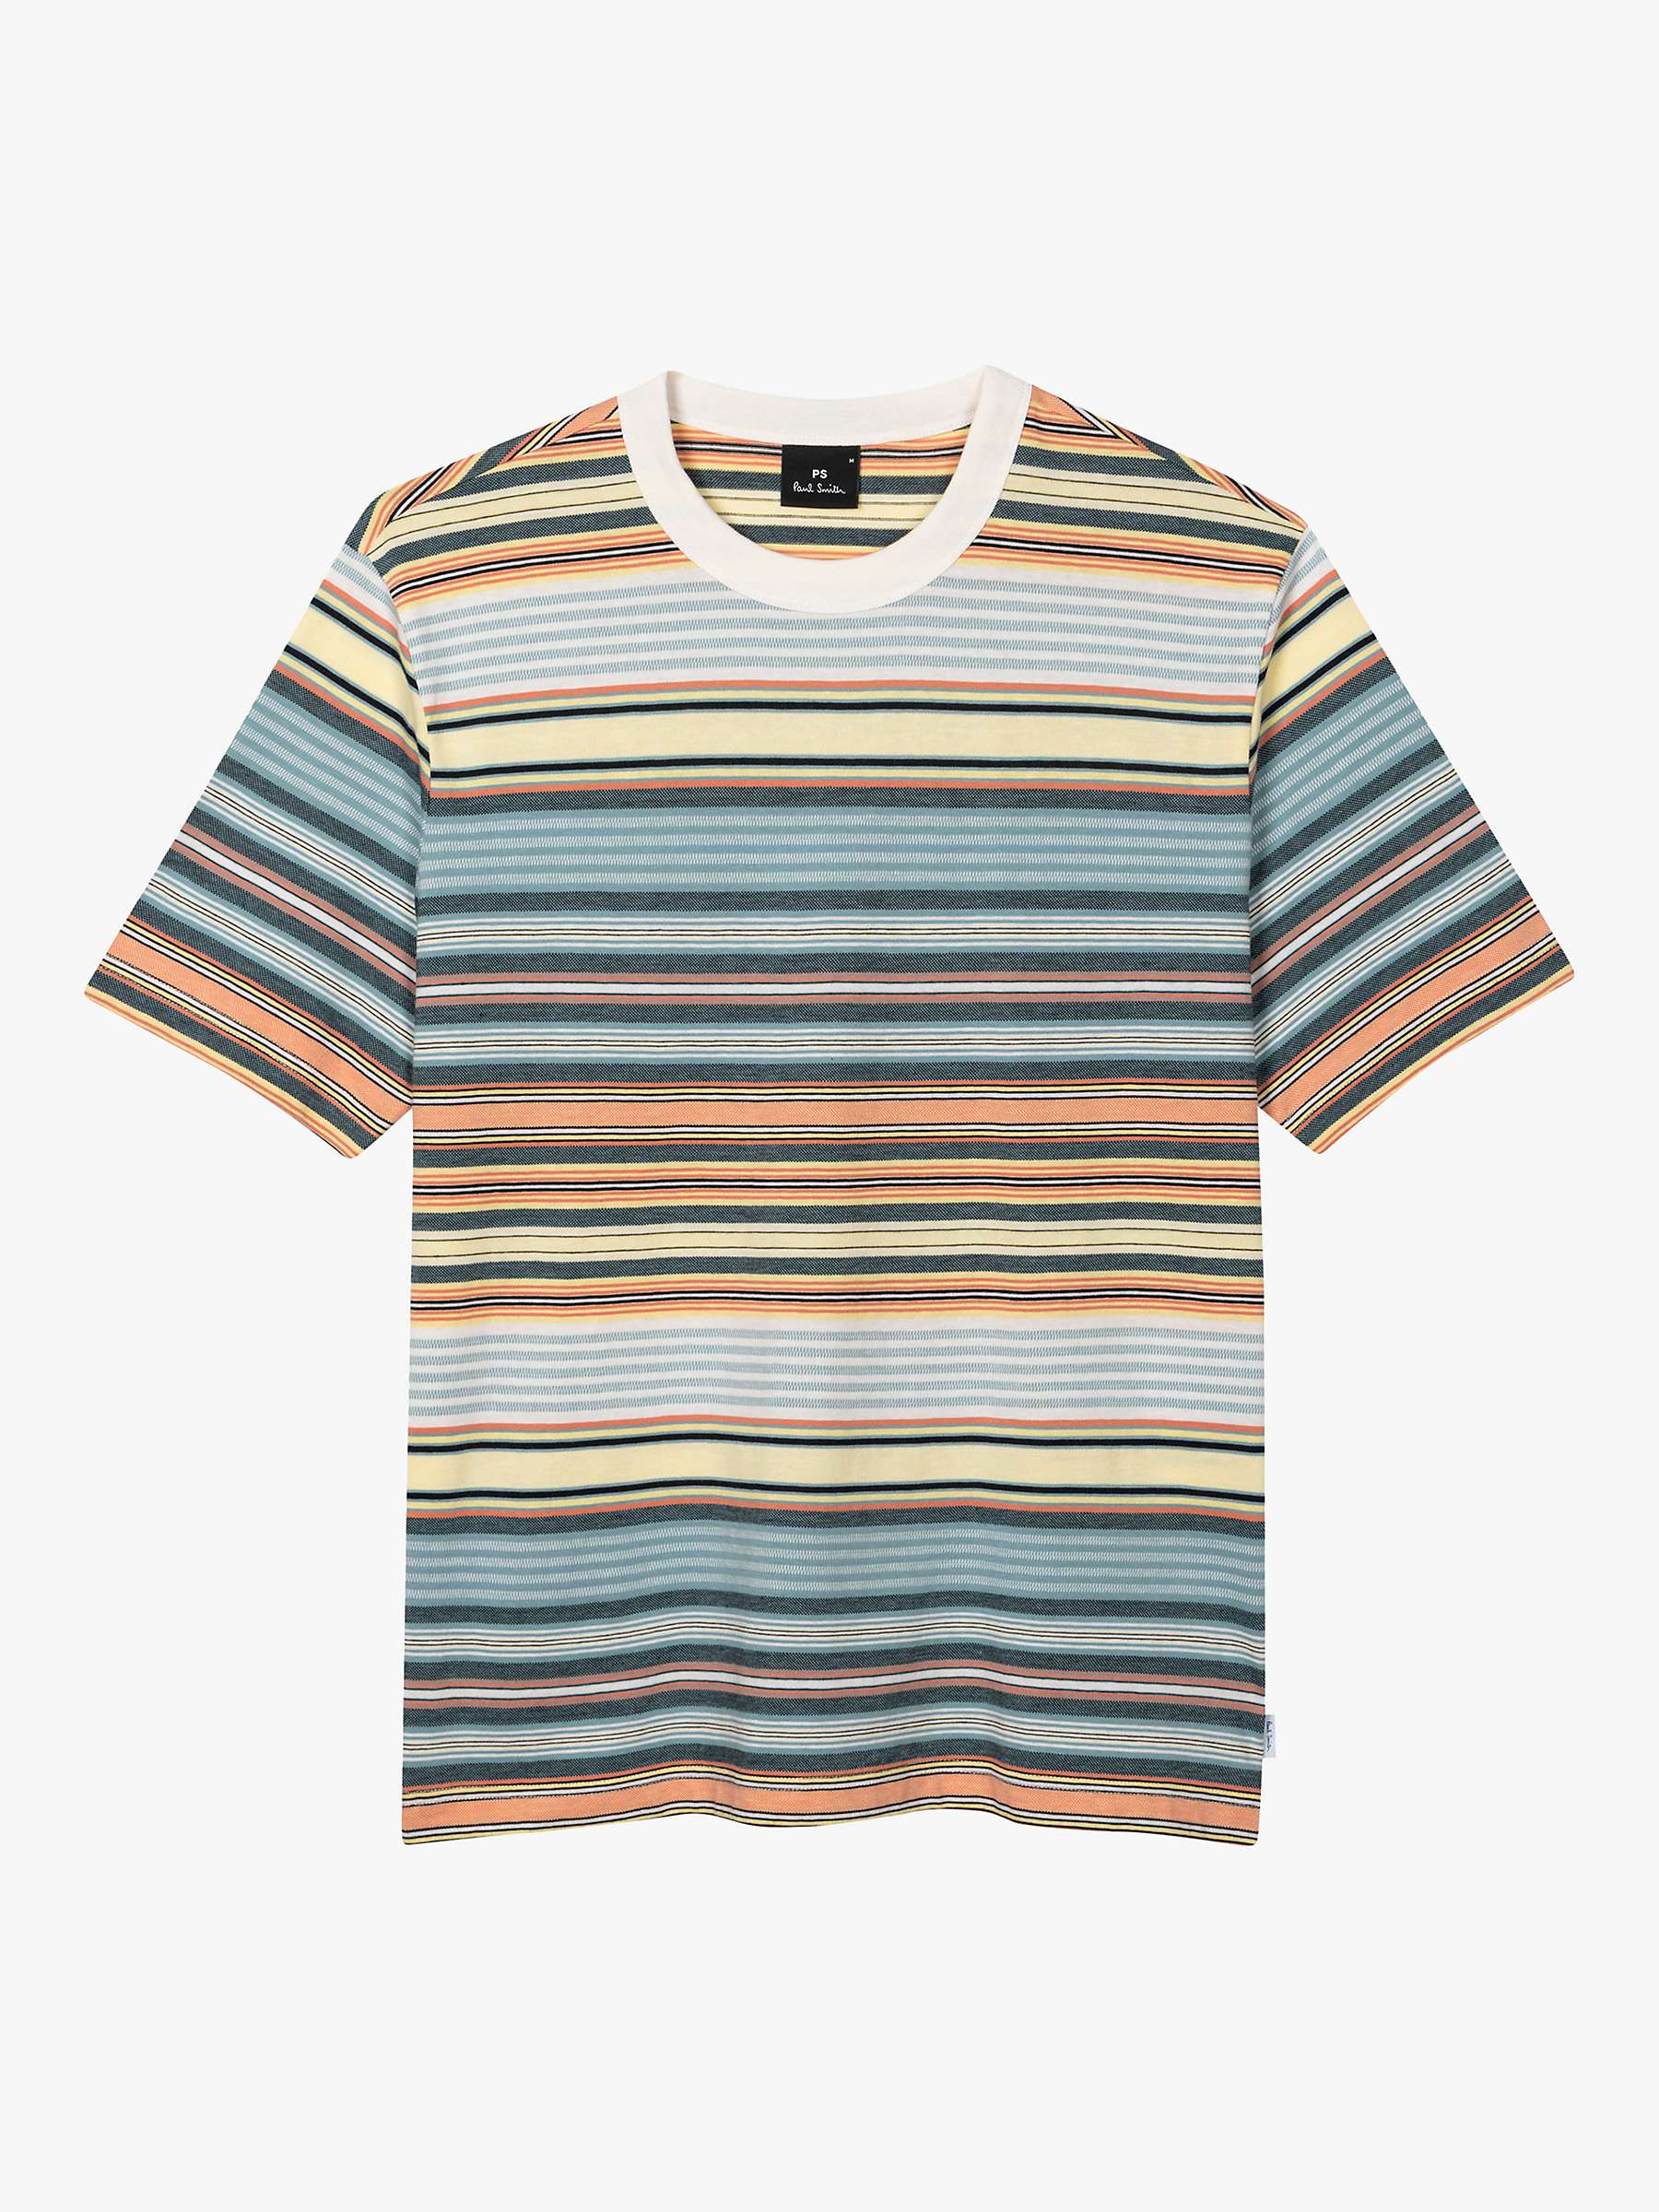 Buy Paul Smith Stripe Short Sleeve T-Shirt, Orange/Multi Online at johnlewis.com